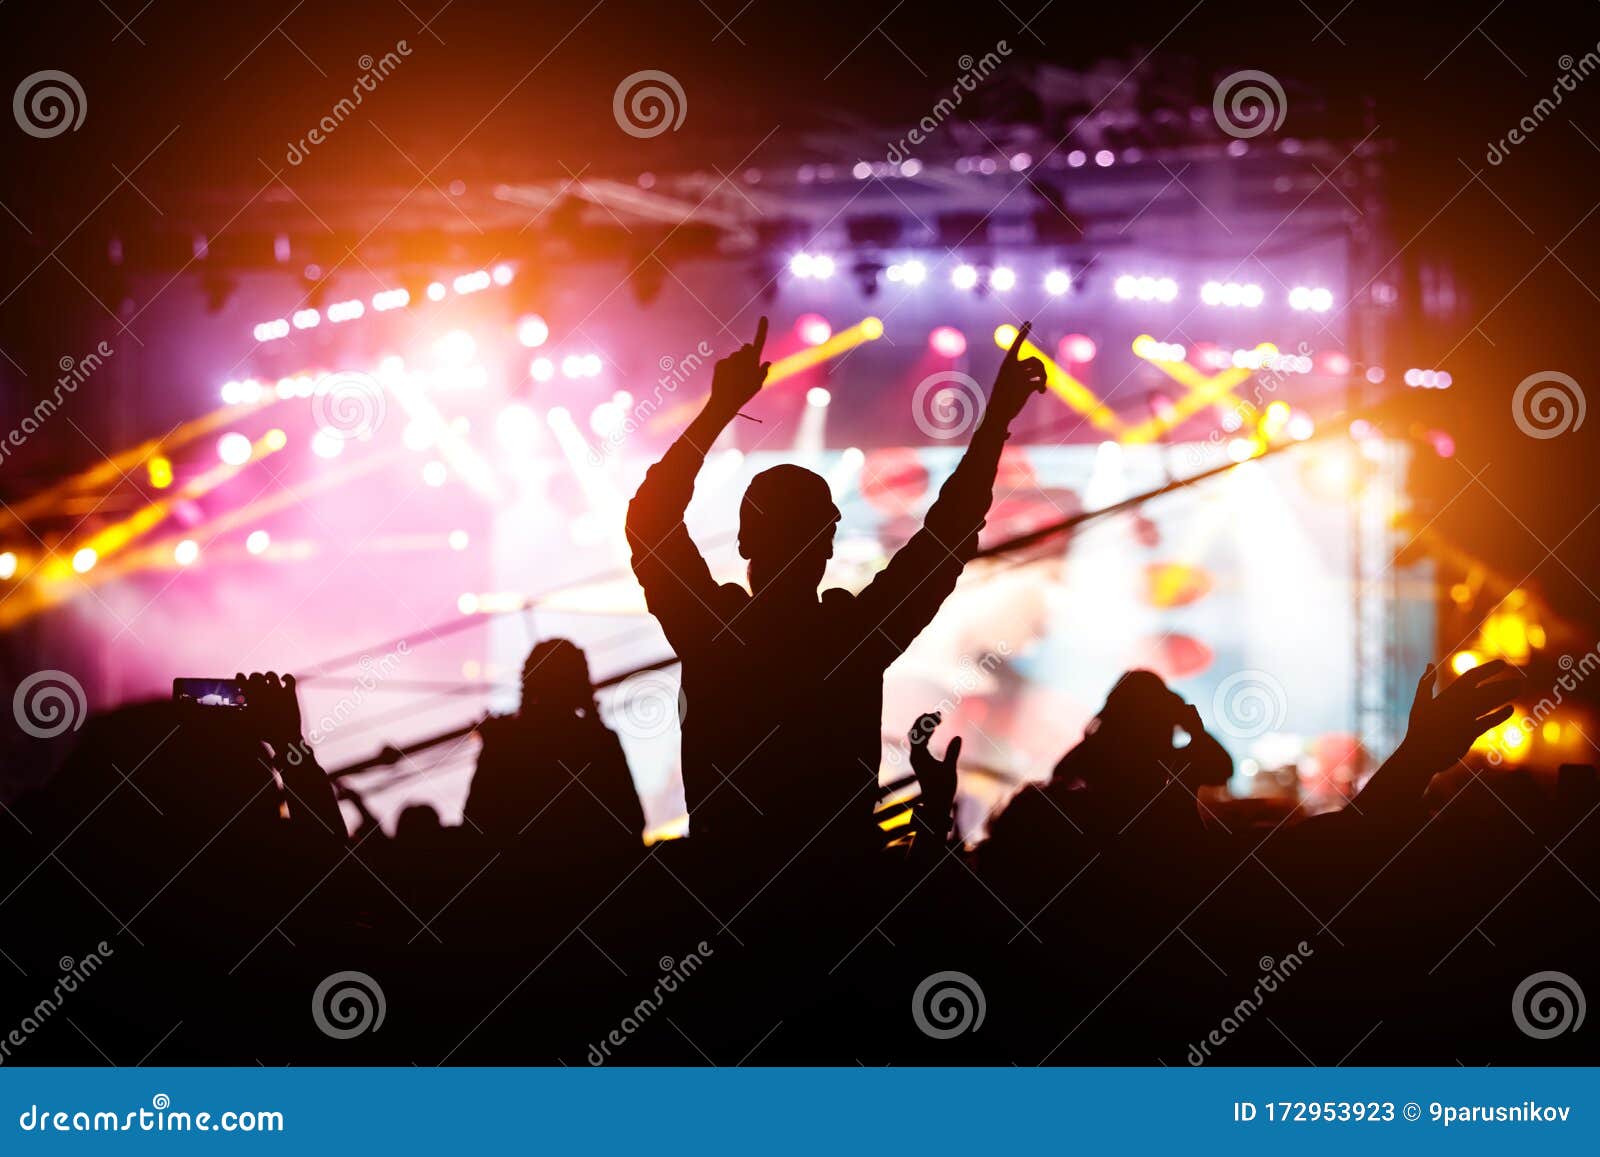 Girl Enjoying a Music Festival or Concert. Black Silhouette of the ...